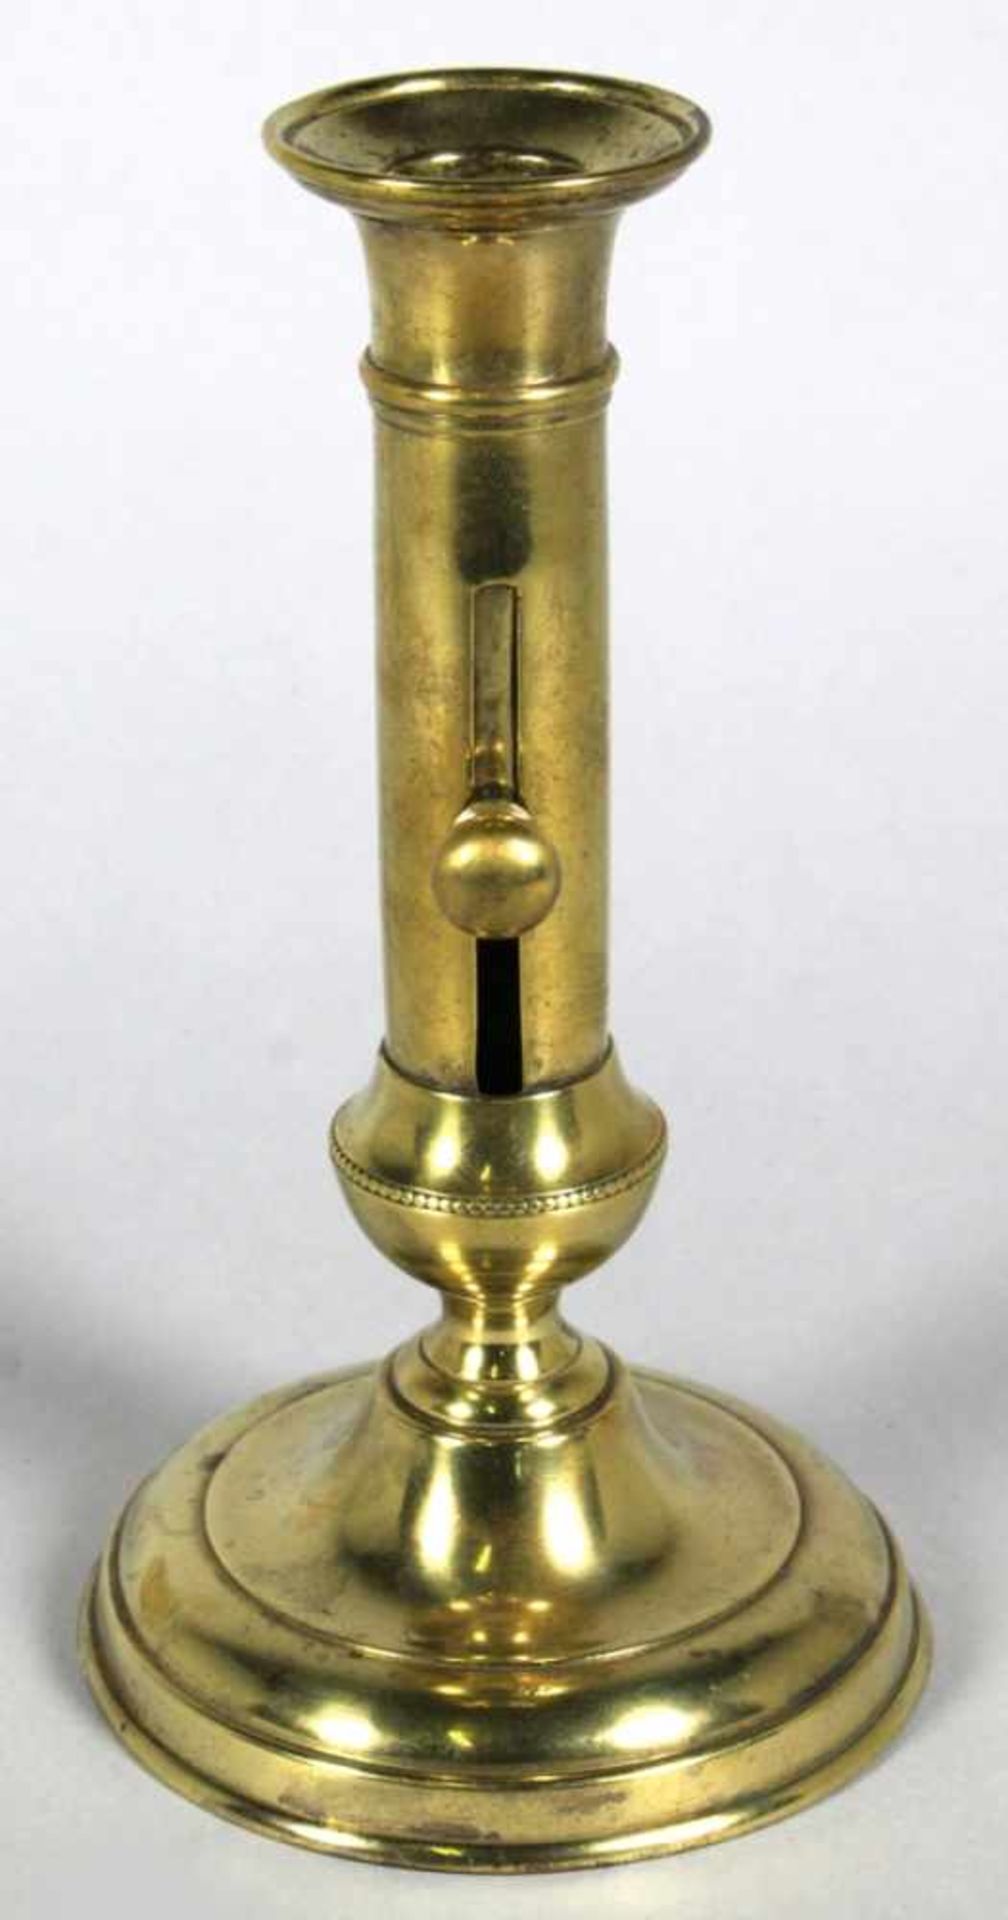 Biedermeier Messing-Schiebeleuchter, 1-flg., dt., um 1820, Tompeten-Rundstand,vasenförmiger Nod - Bild 2 aus 3